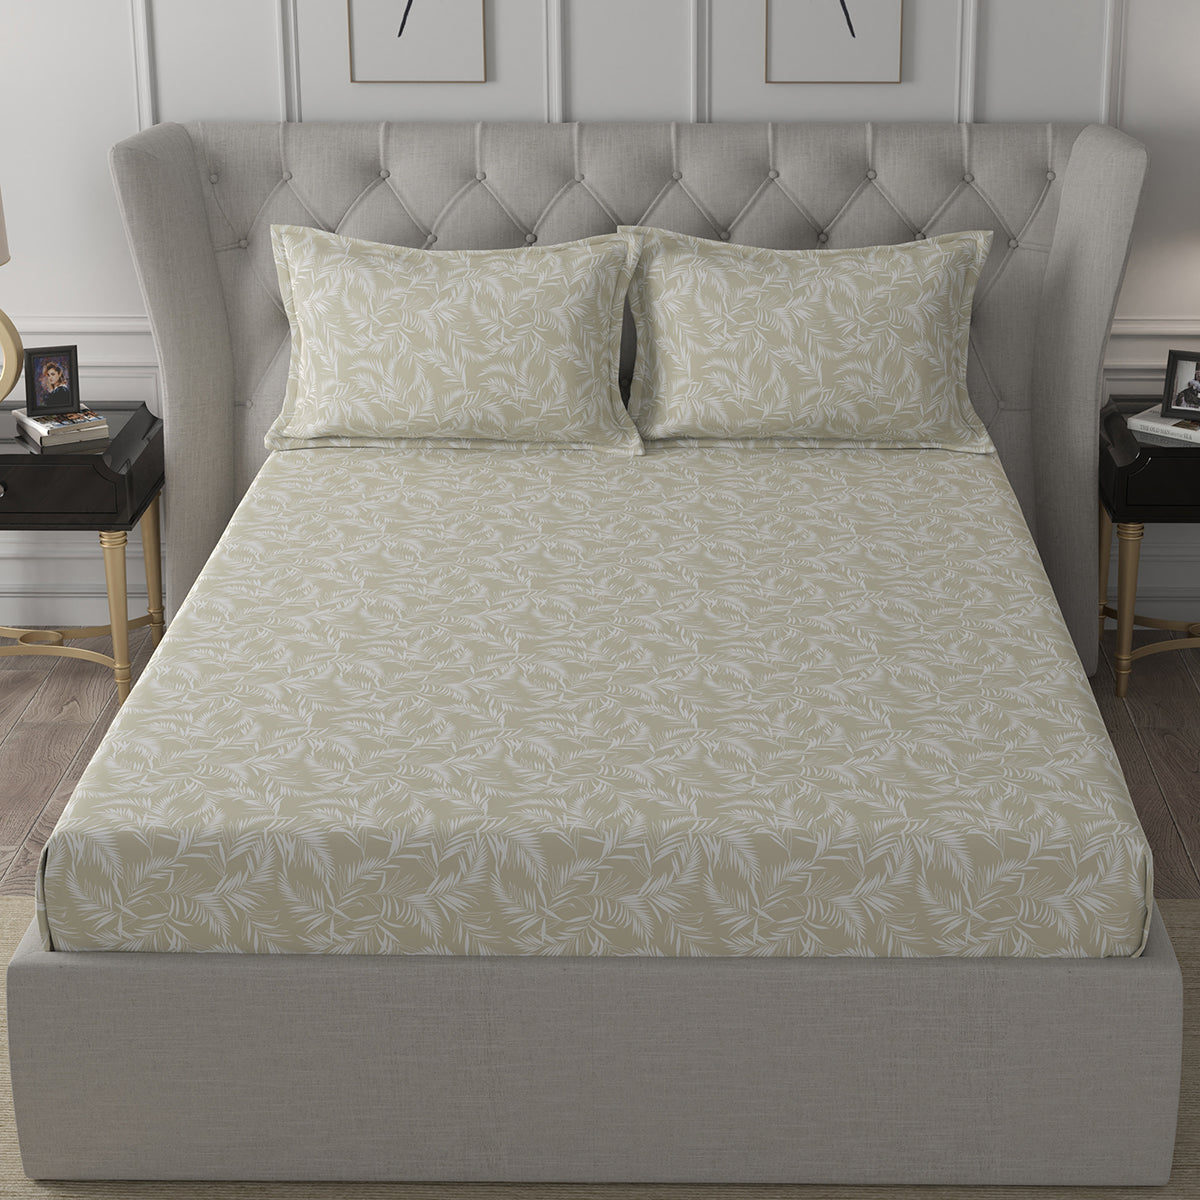 Ardour Stellan Printed Bed Sheet With Pillow Case